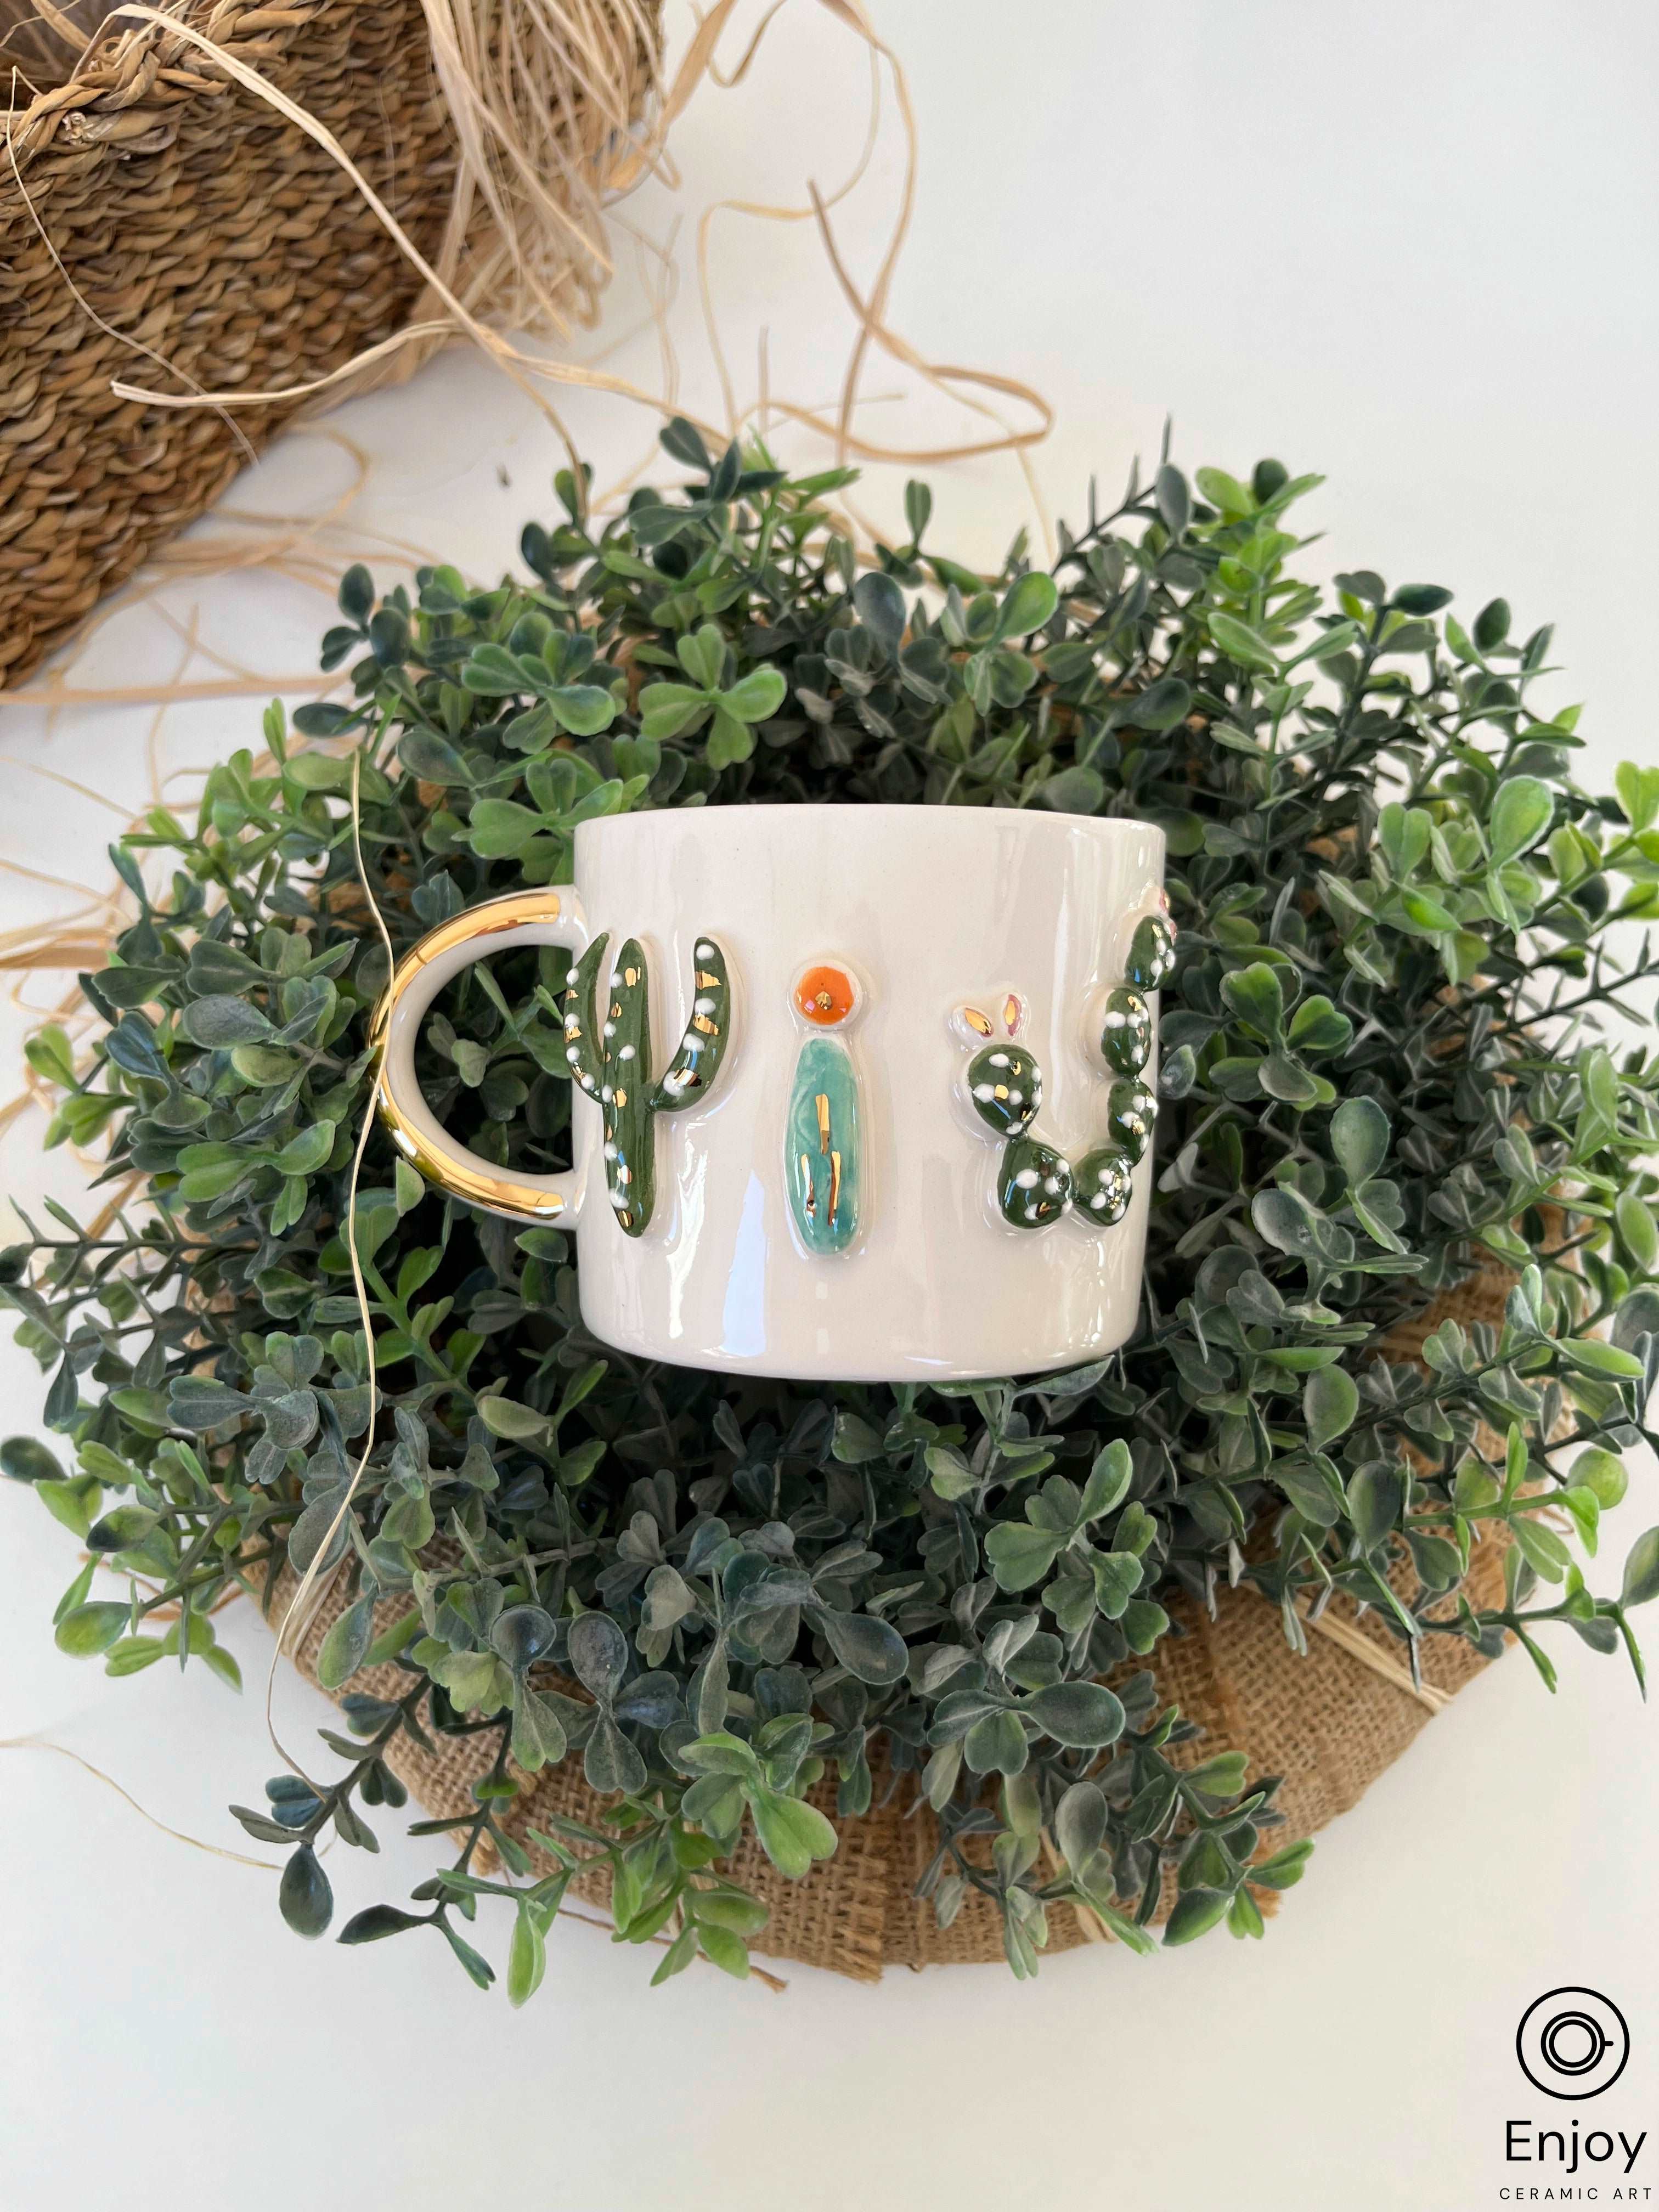 Handmade Happy Forest Floral Coffee Mug - 10oz, Hand-thrown